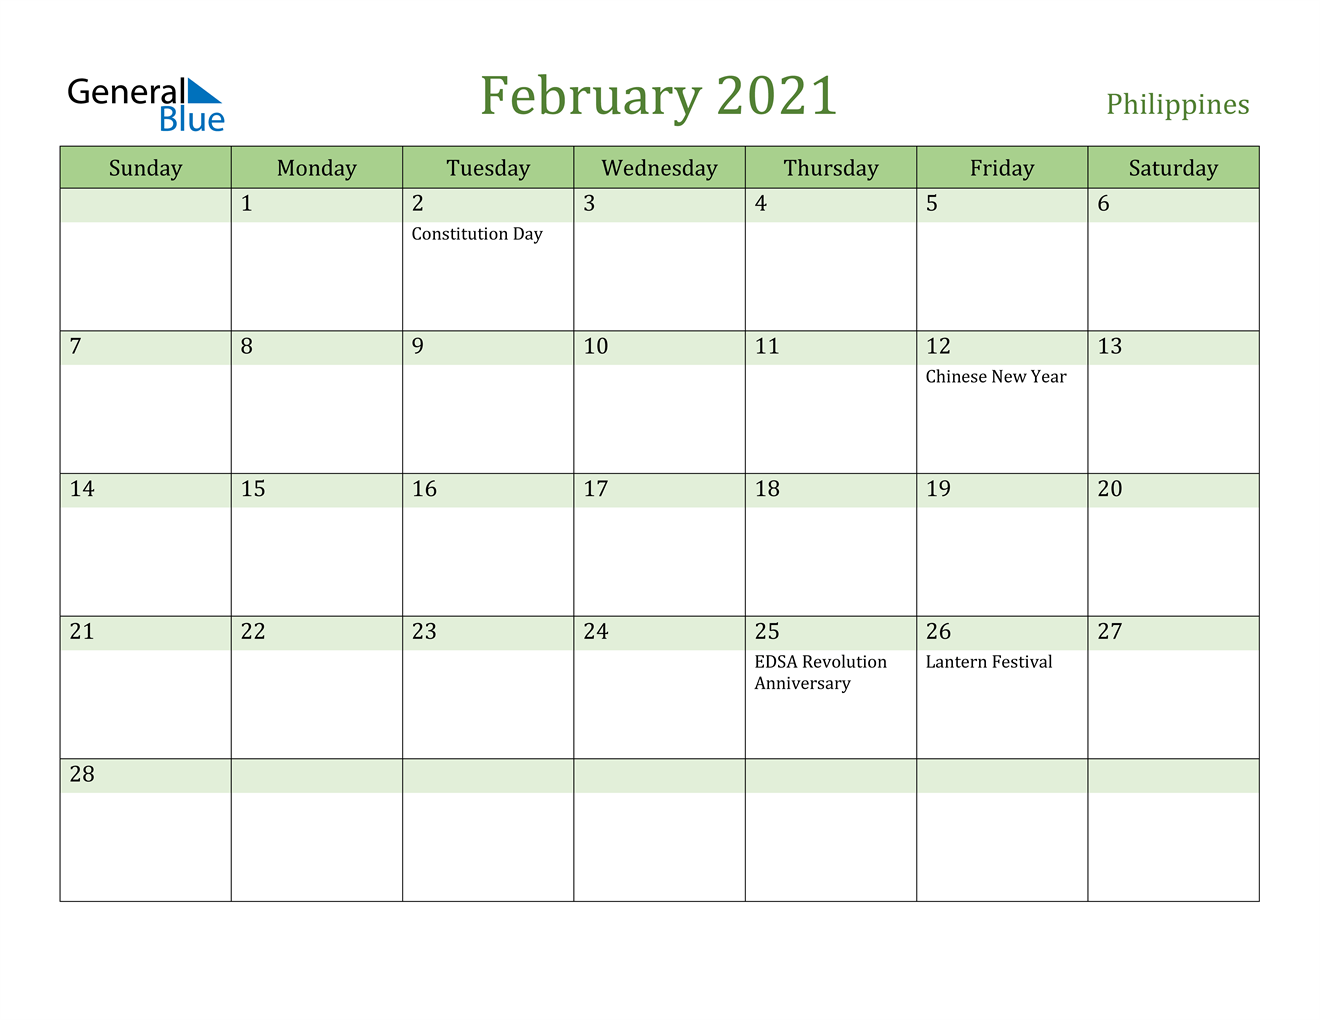 February 2021 Calendar - Philippines